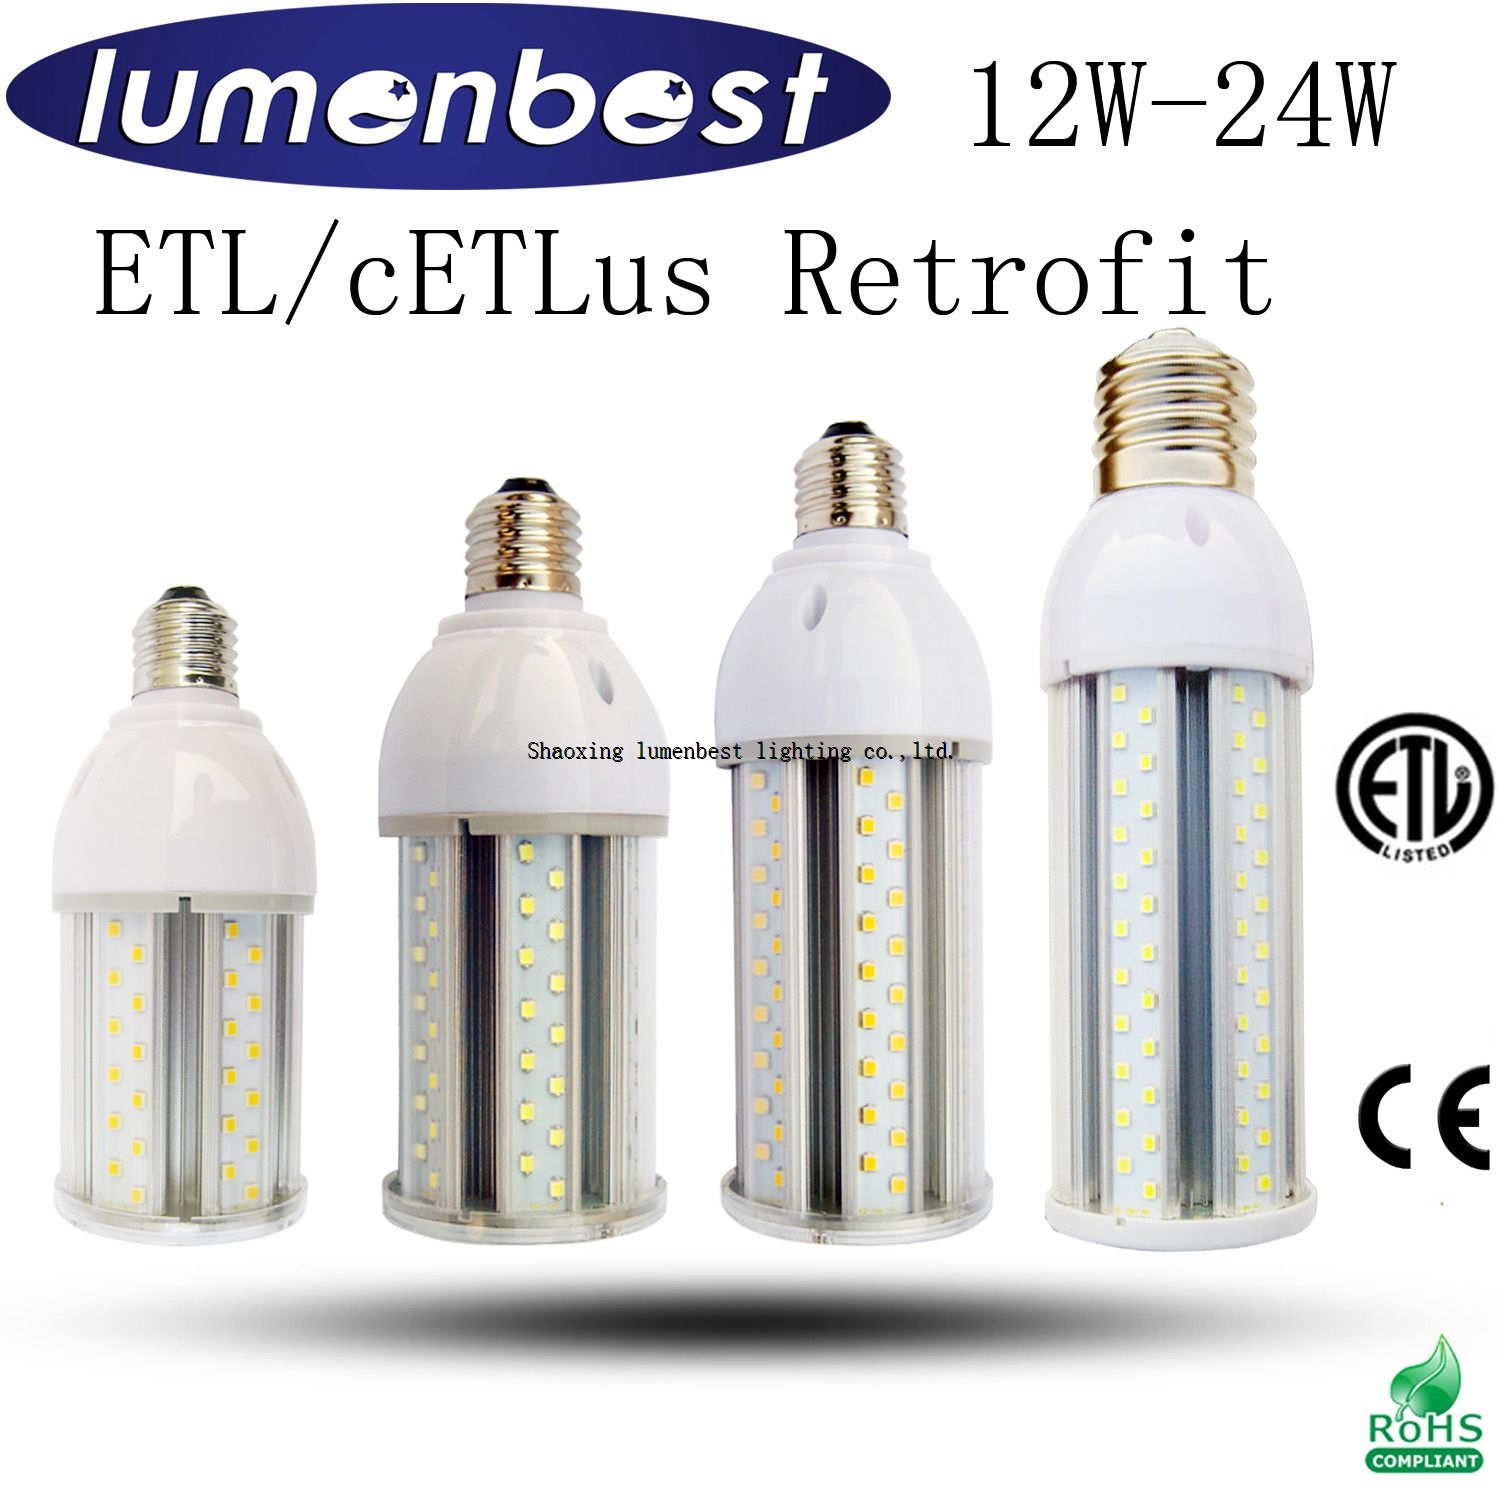 12W-24W High Pf LED Lighting/Light/Lamp Bulb